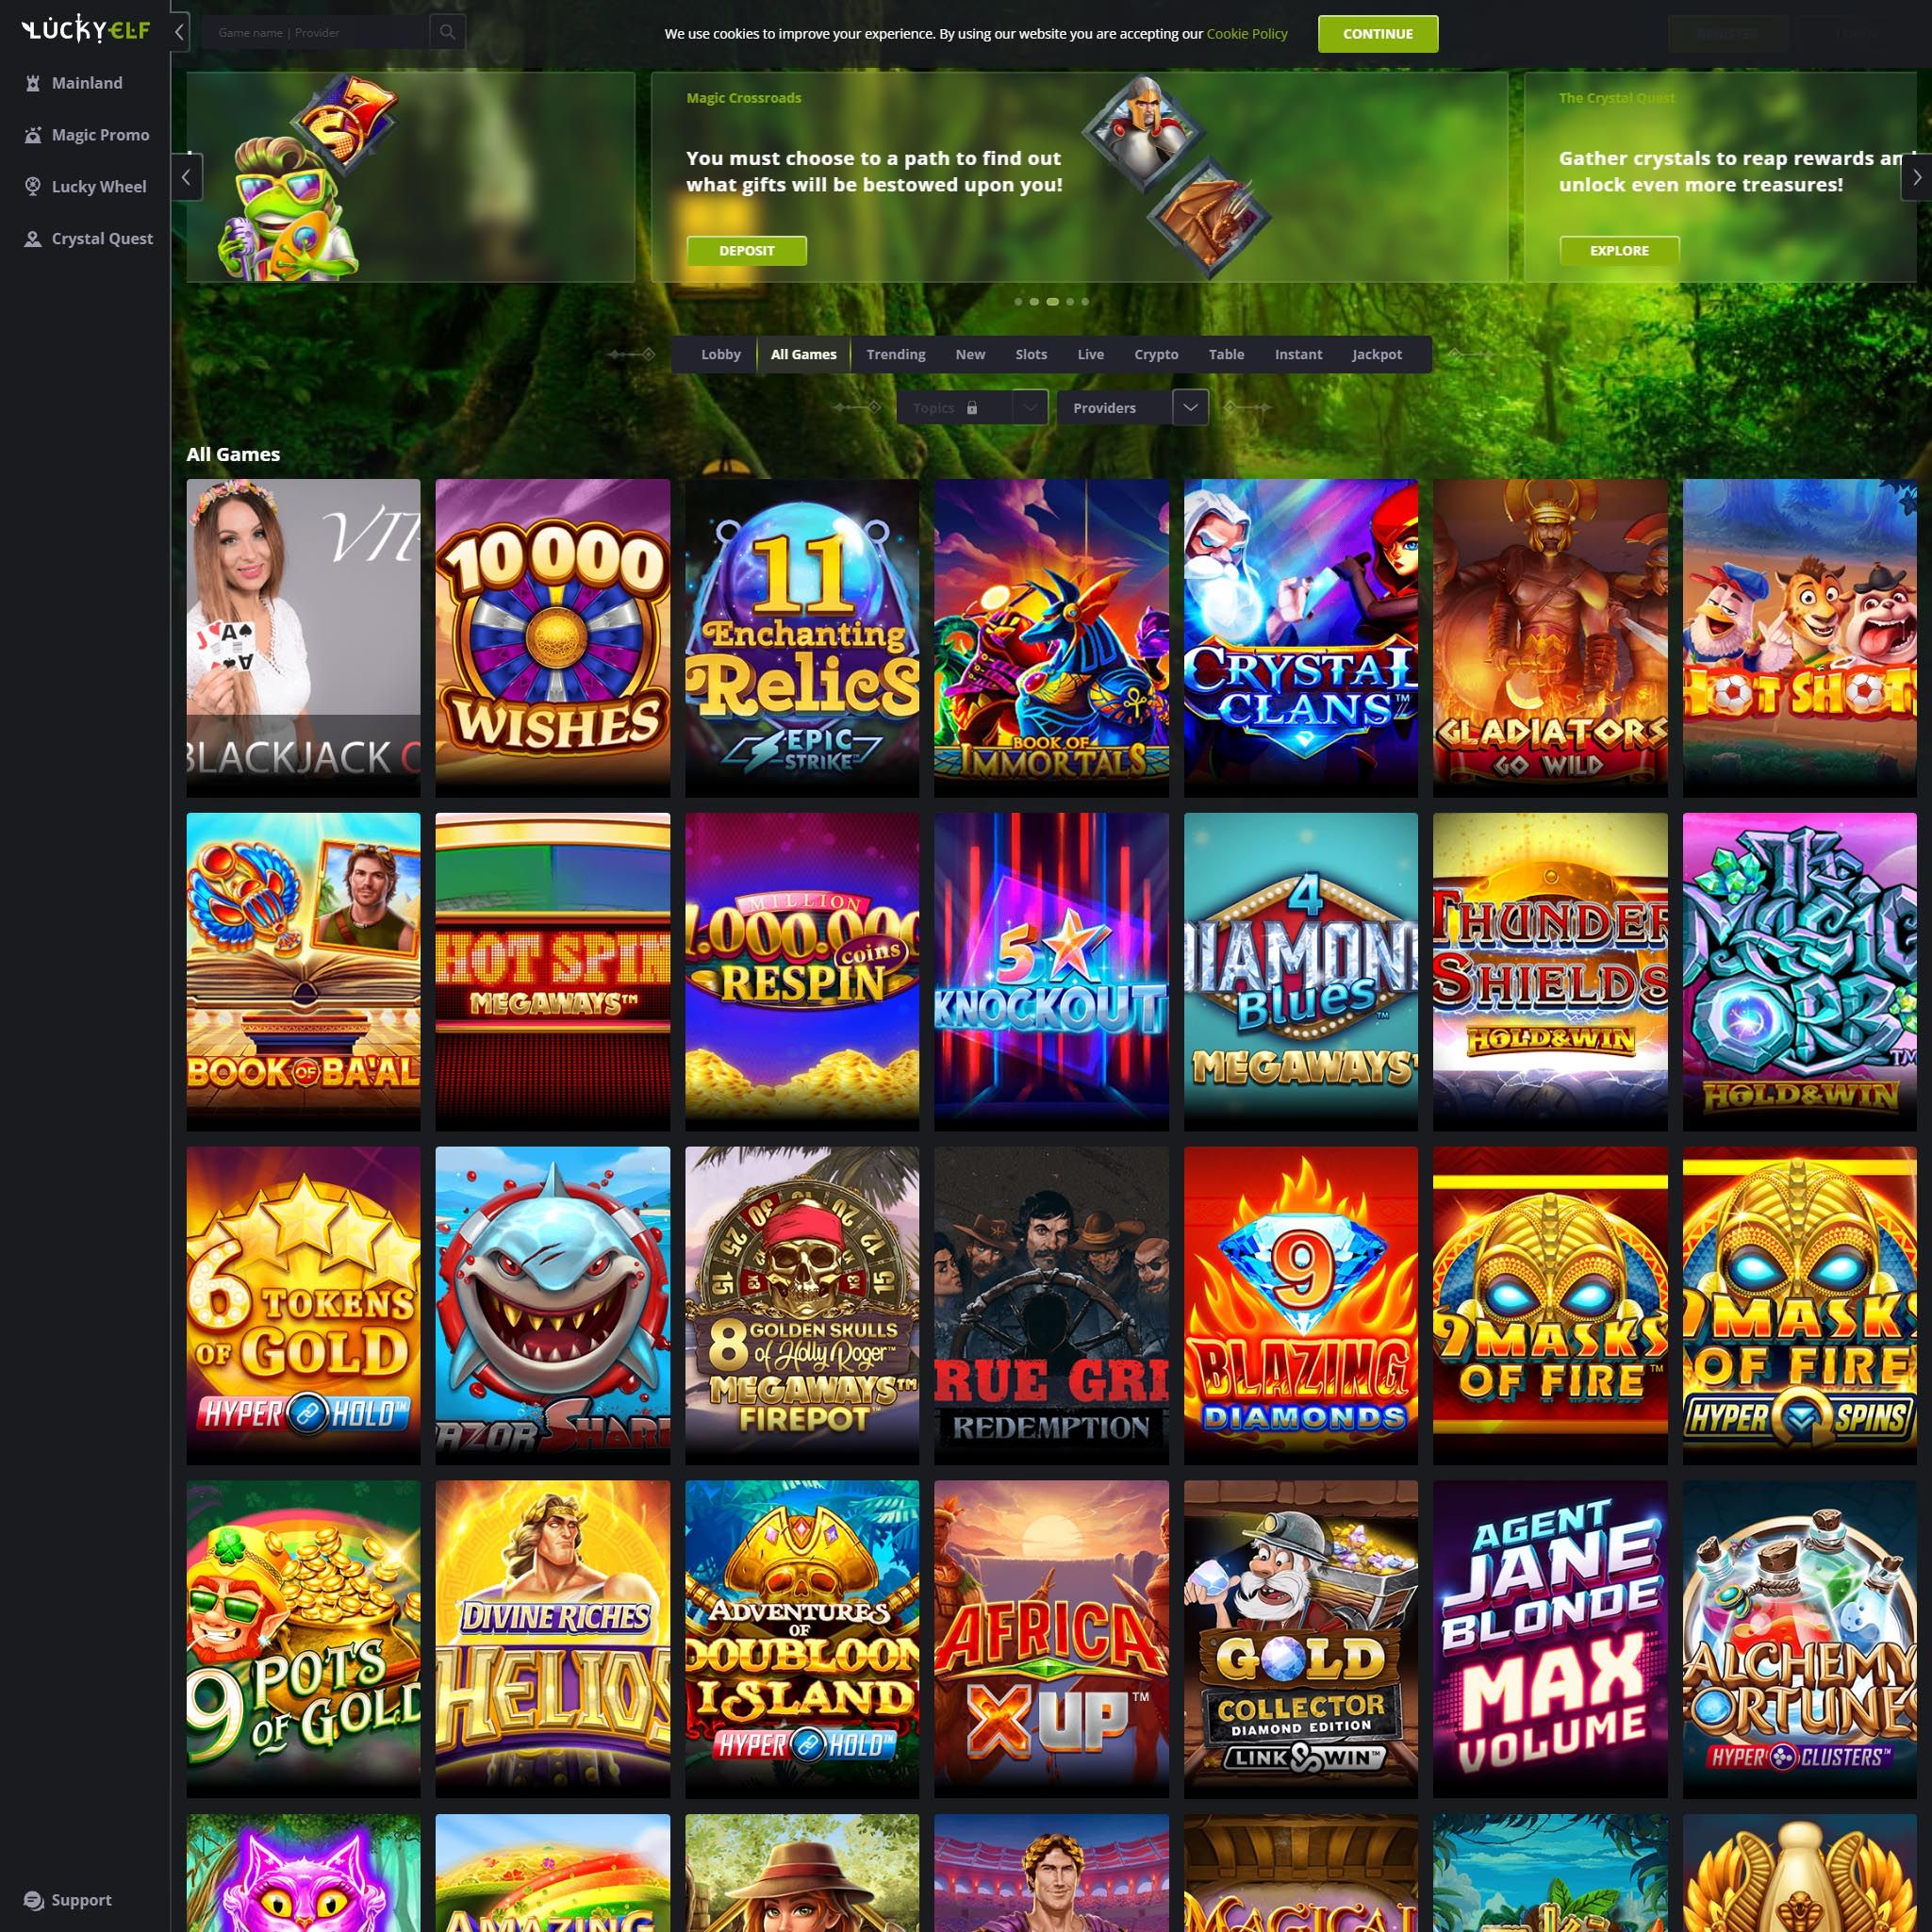 Luckyelf Casino full games catalogue